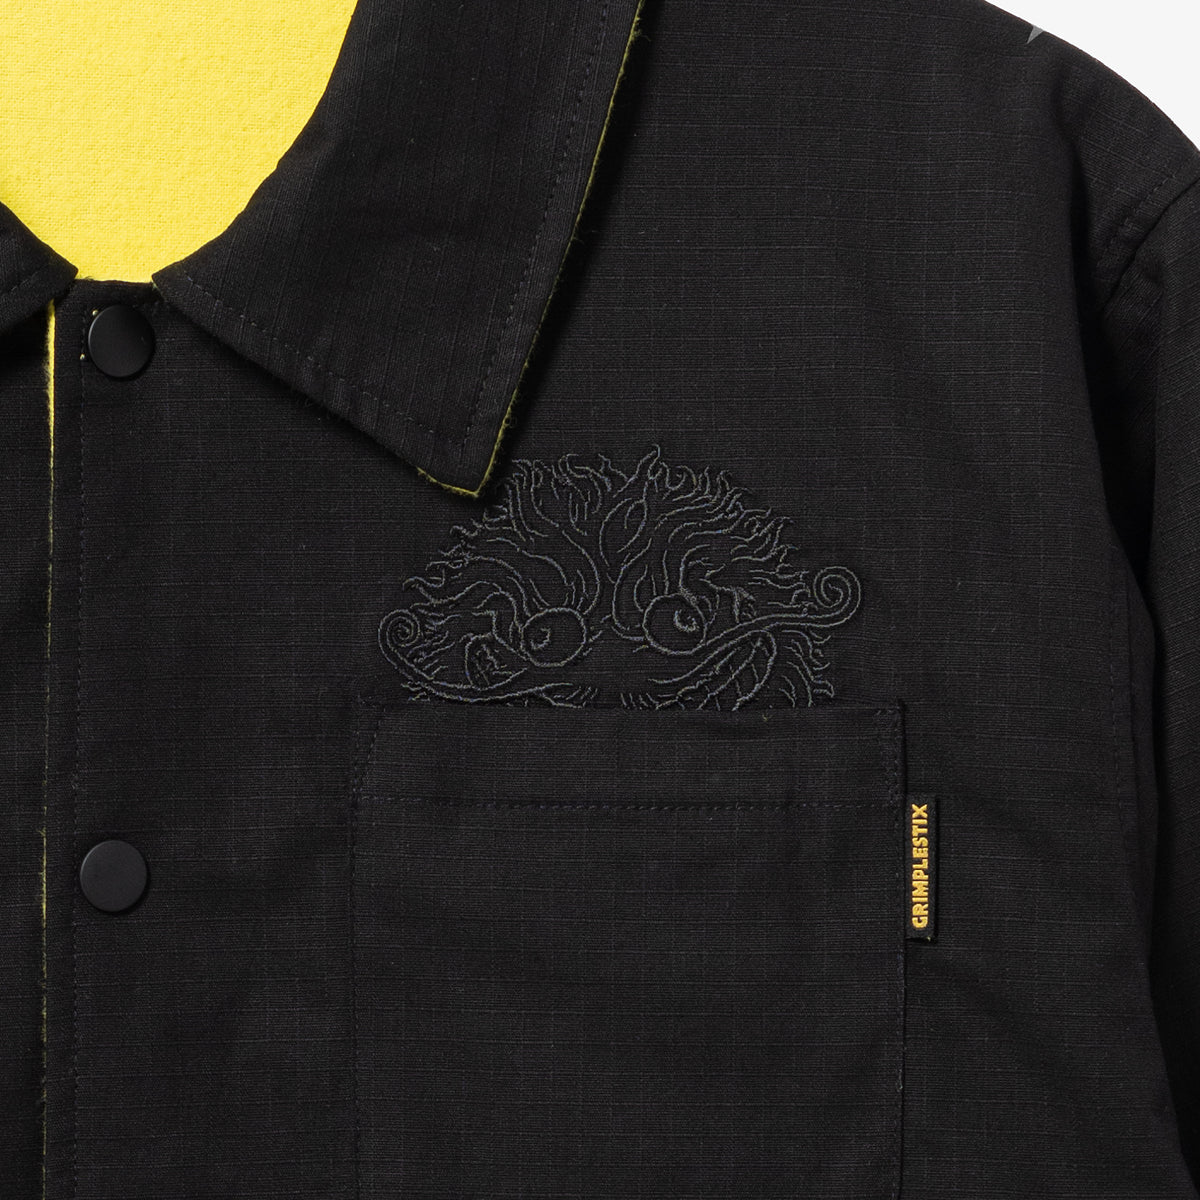 Grimple Jacket (Black/Yellow)